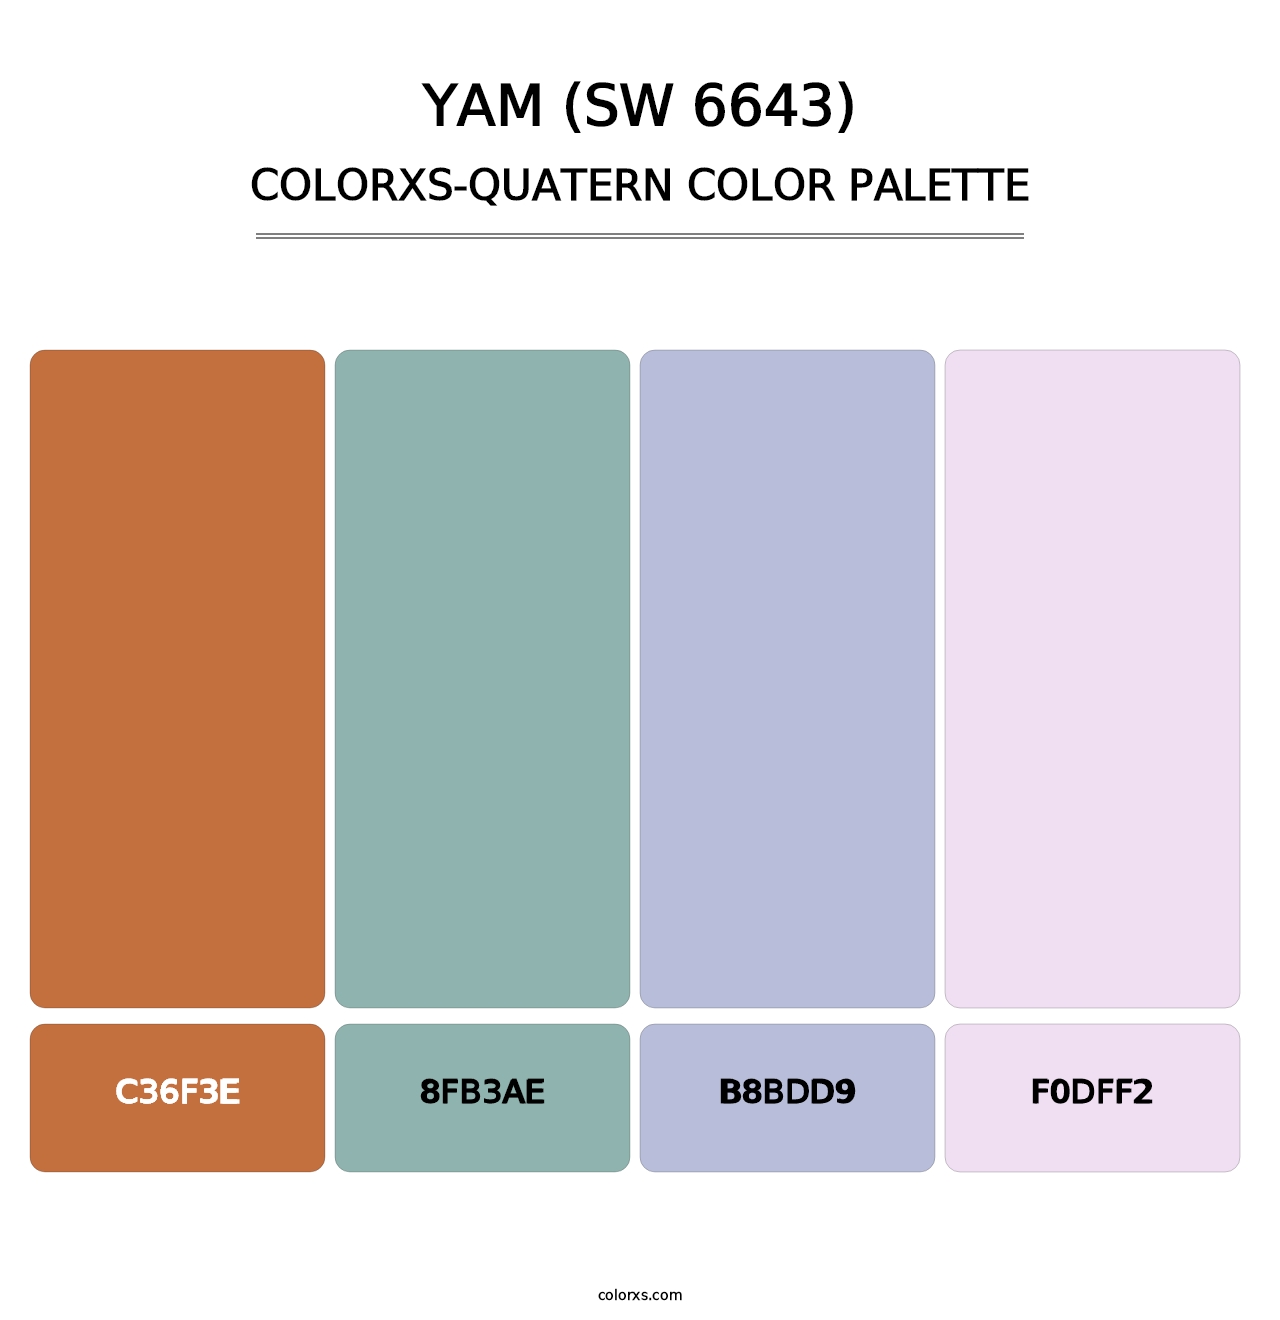 Yam (SW 6643) - Colorxs Quatern Palette